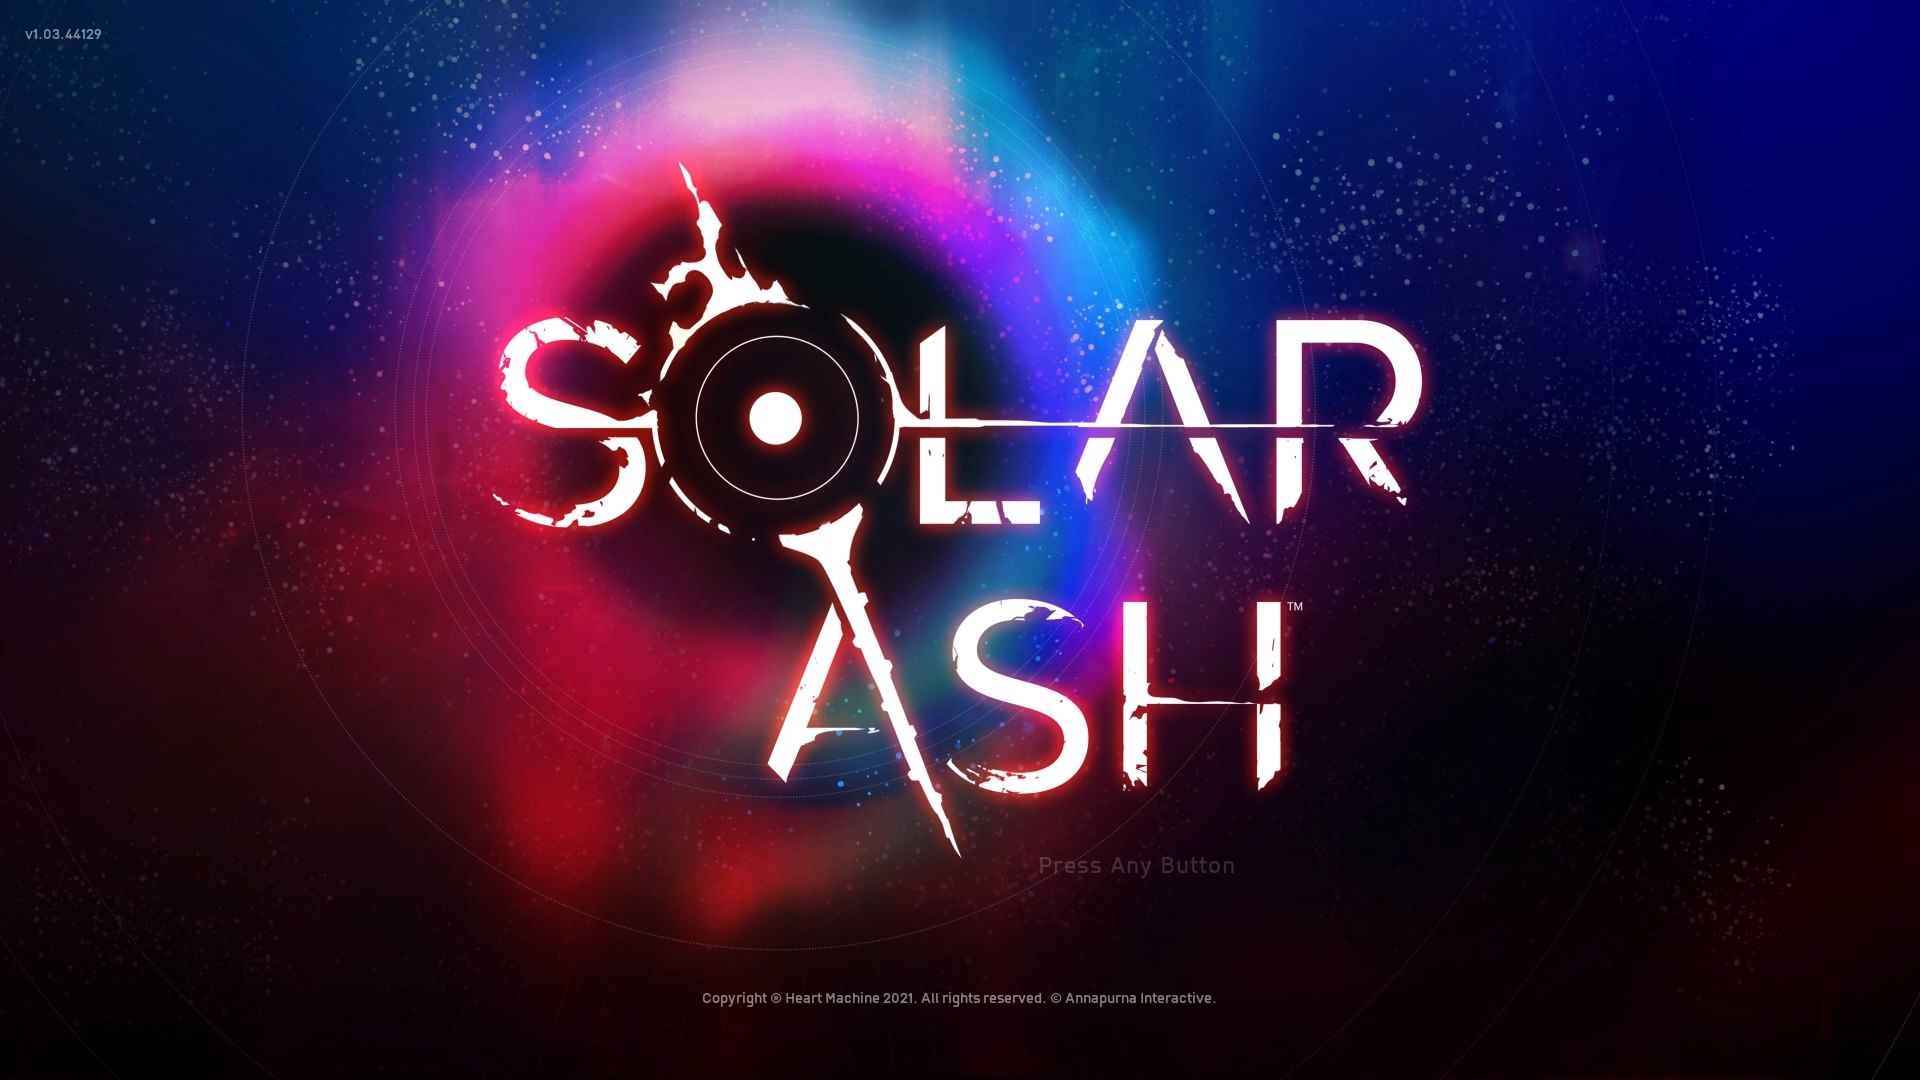 solar ash echo